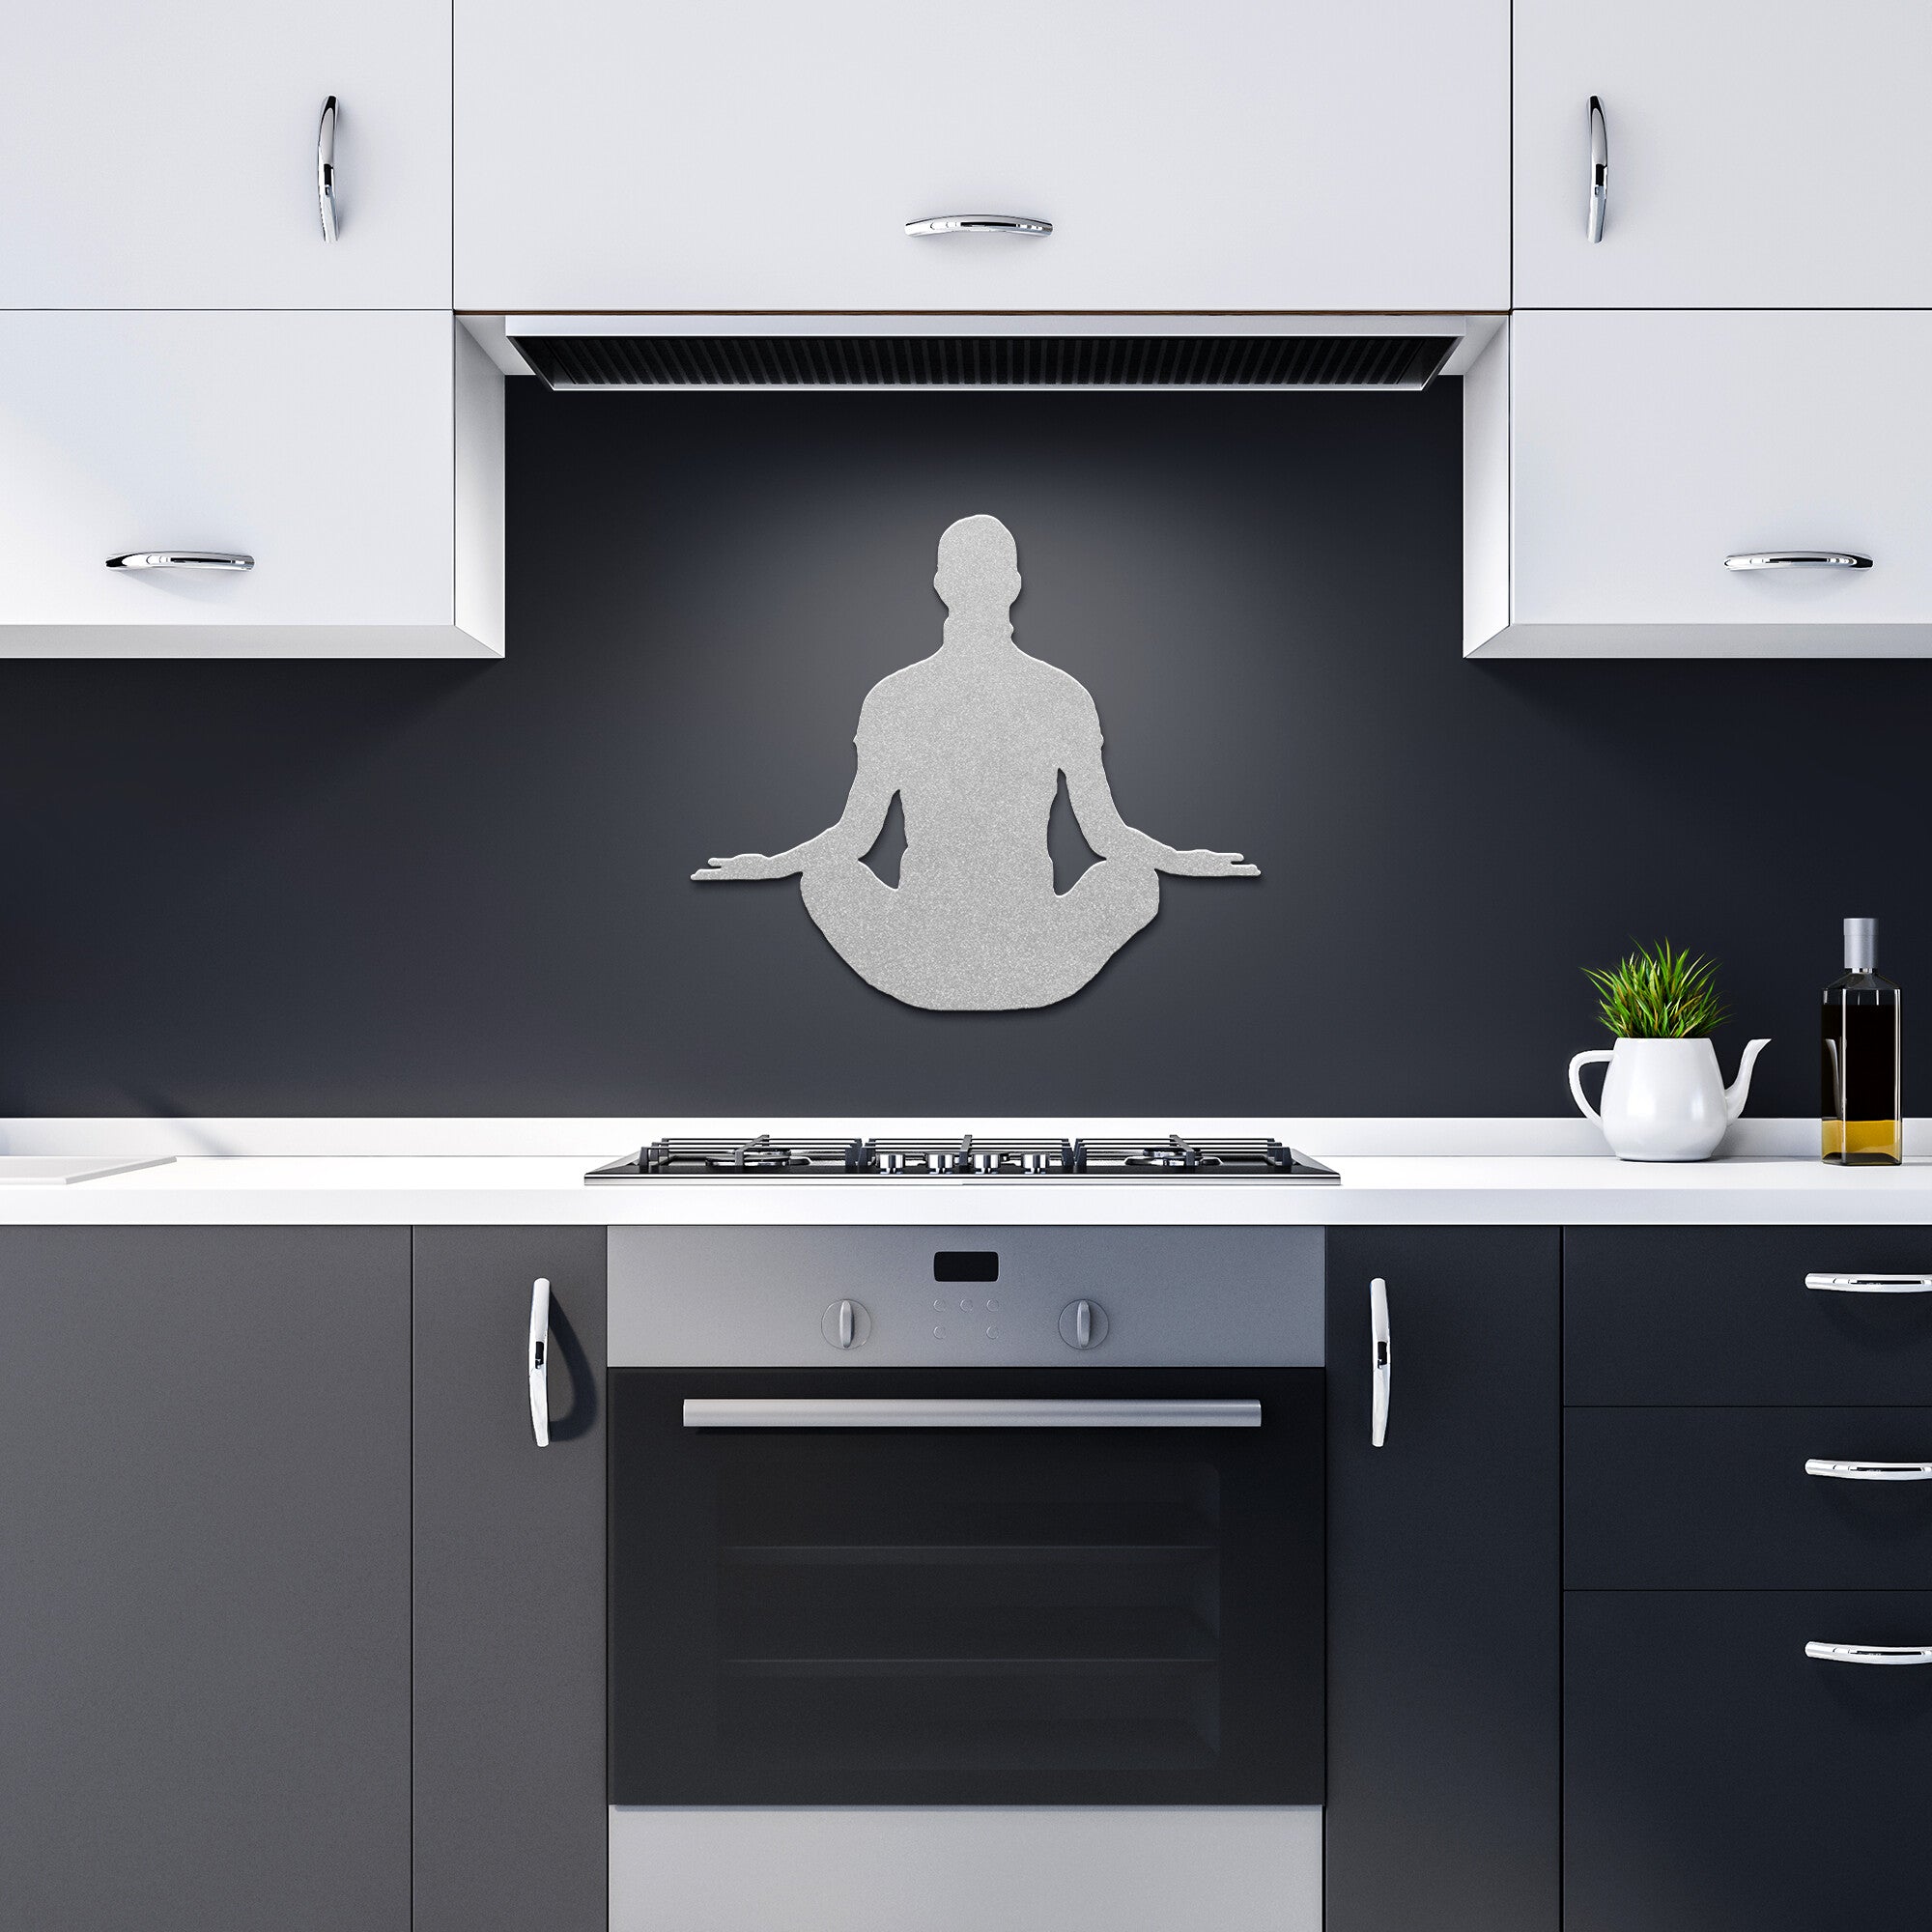 Yoga Man - Meditation Gift - Metal Sign - Personal Hour for Yoga and Meditations 